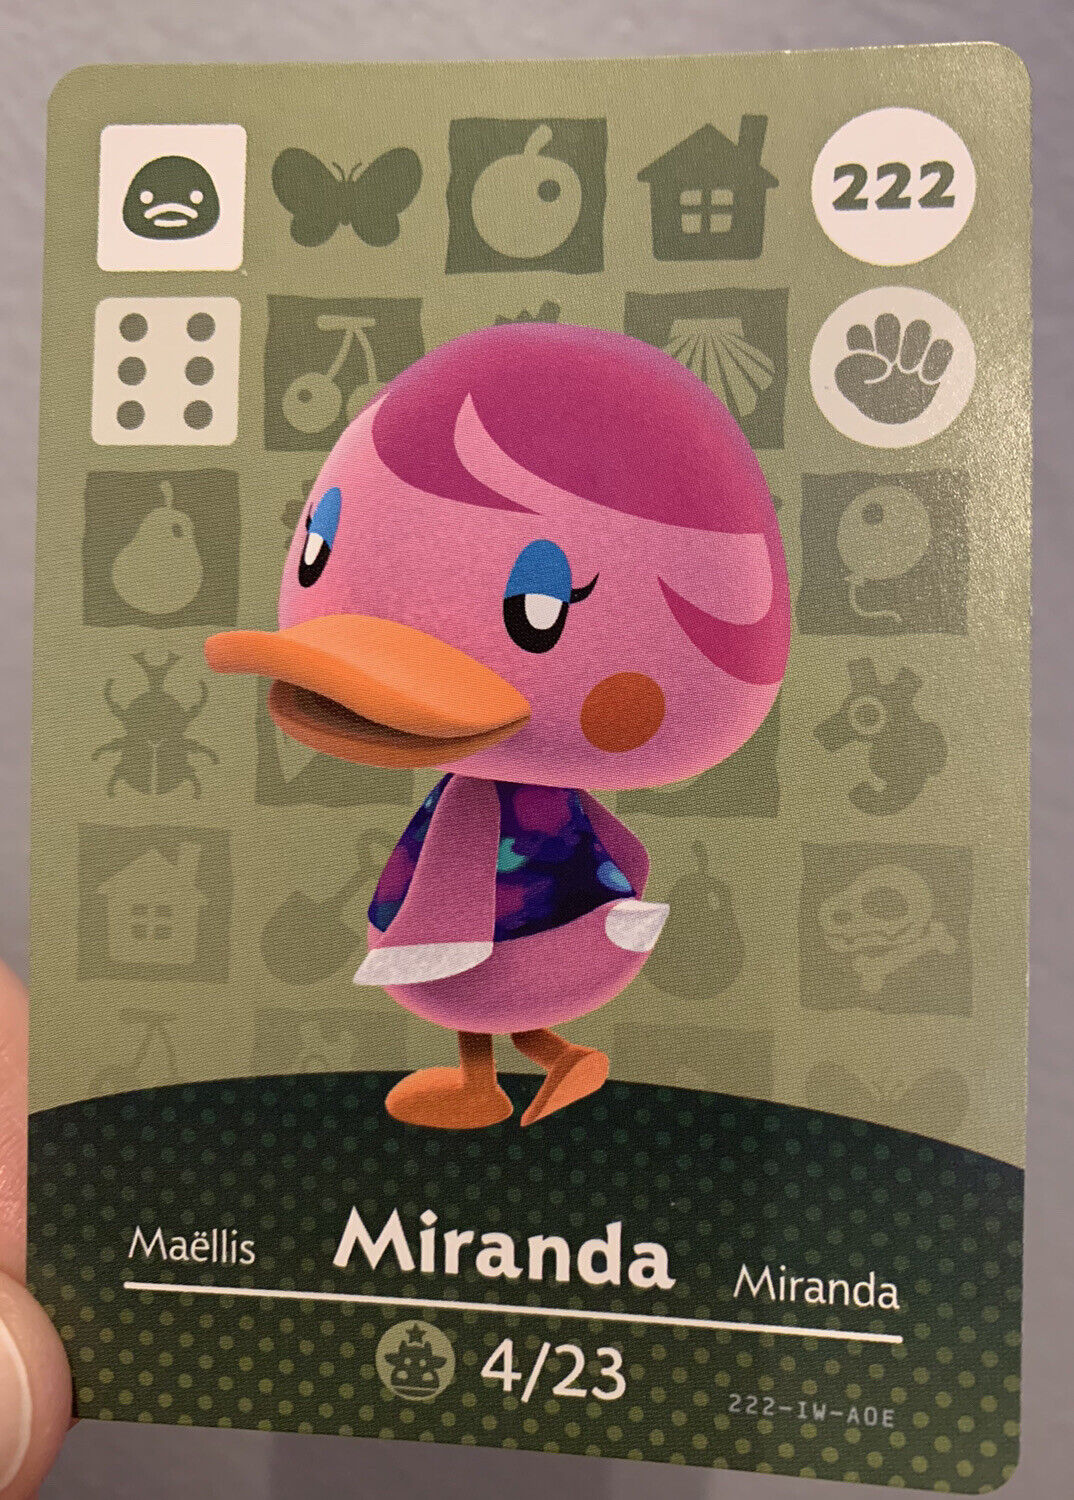 AUTHENTIC 222 MIRANDA Nintendo Amiibo Animal Crossing Card - Never Scanned